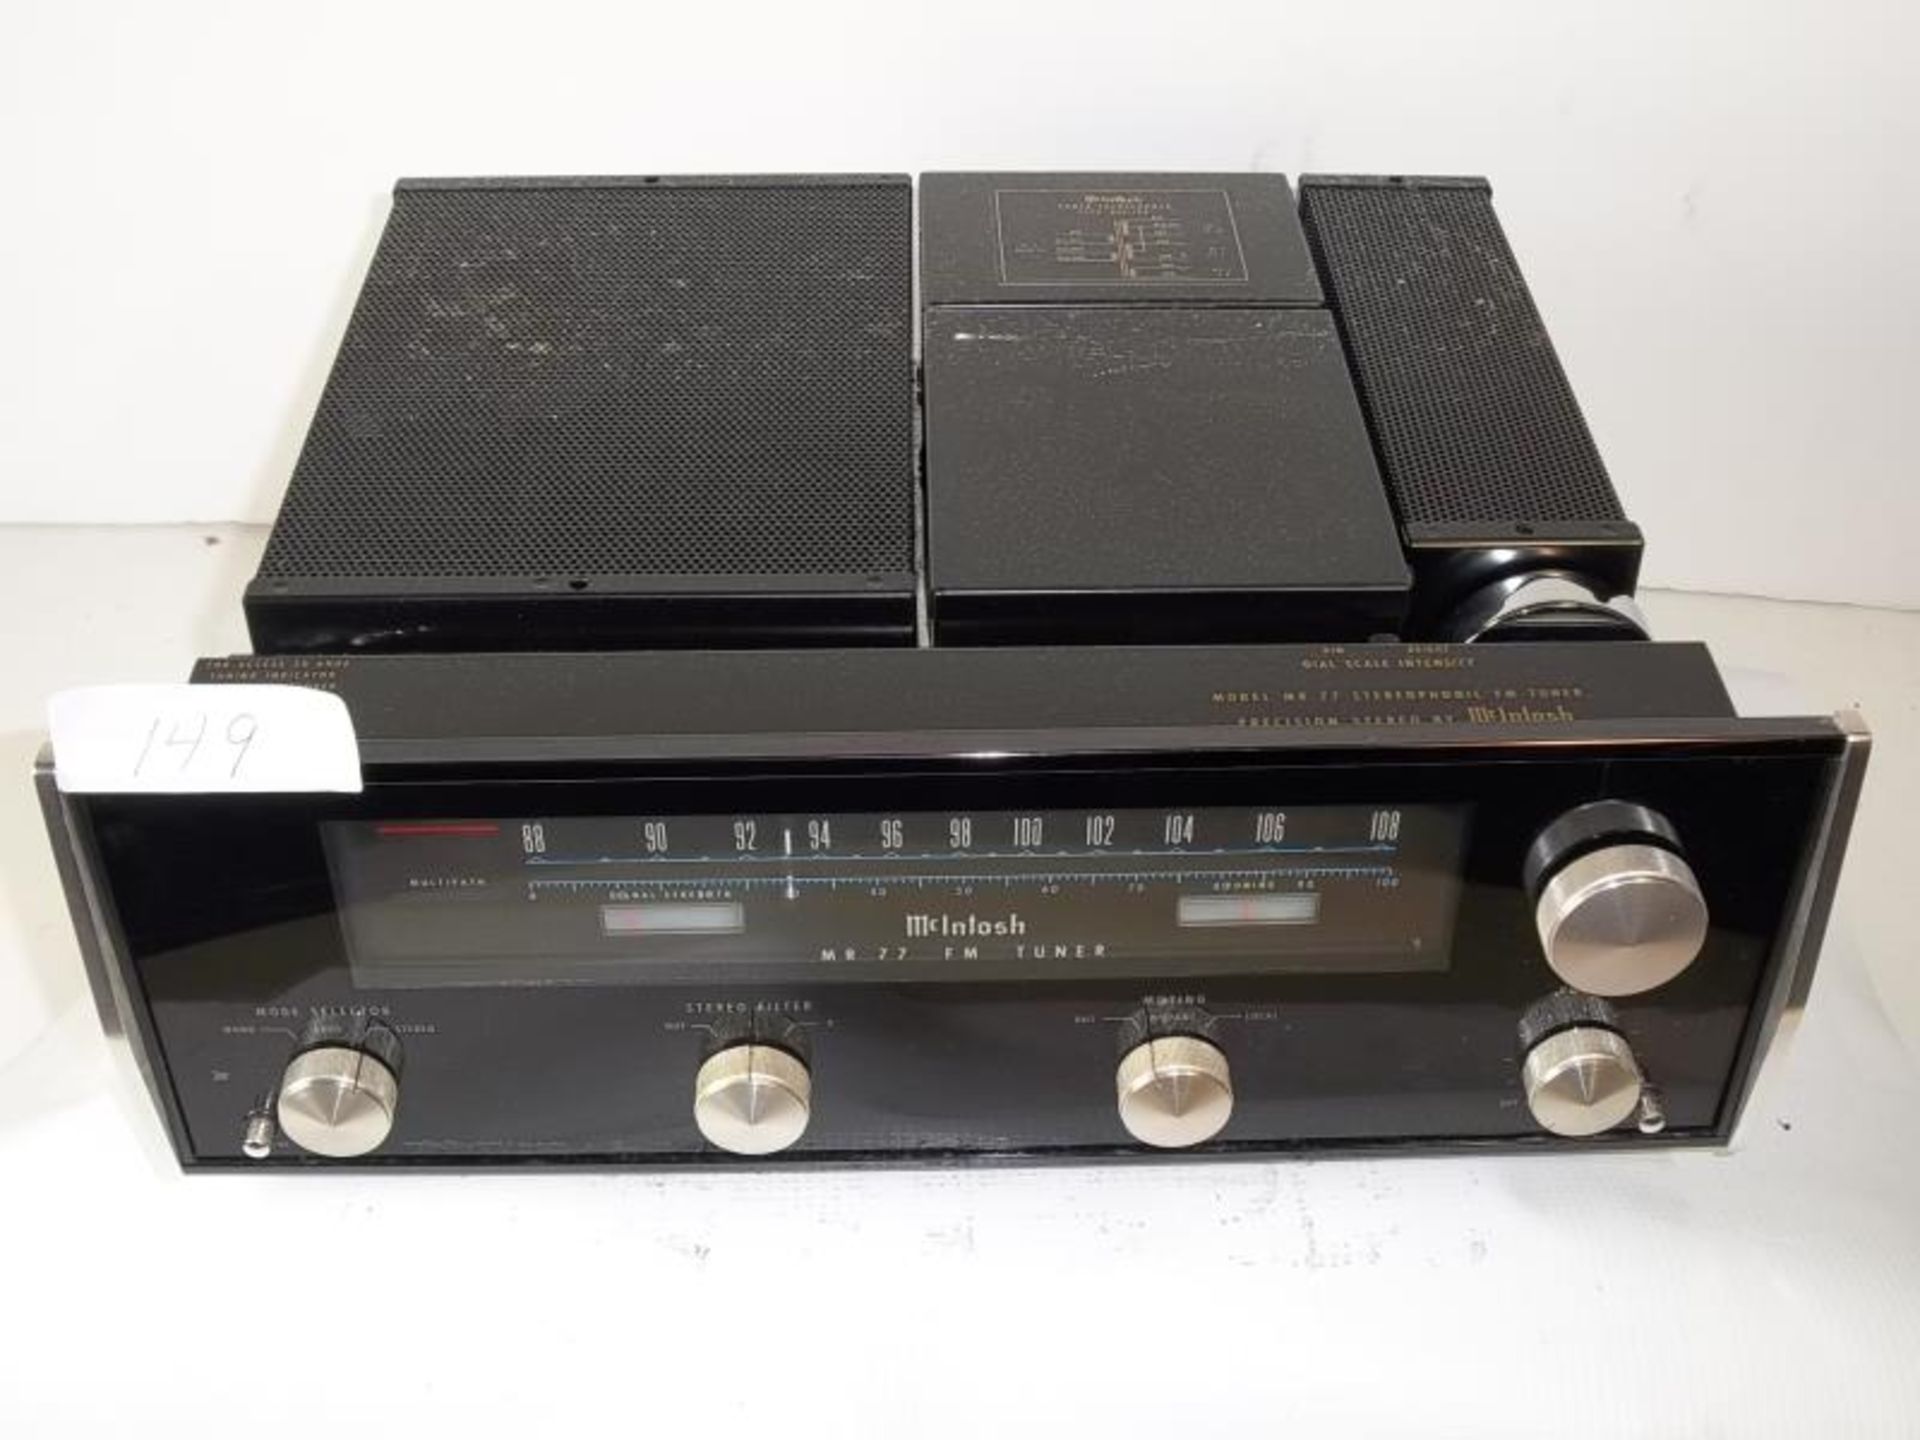 McIntosh MR 77, Digital FM Tuner, wood case, s # 42Y94, tested - powers up